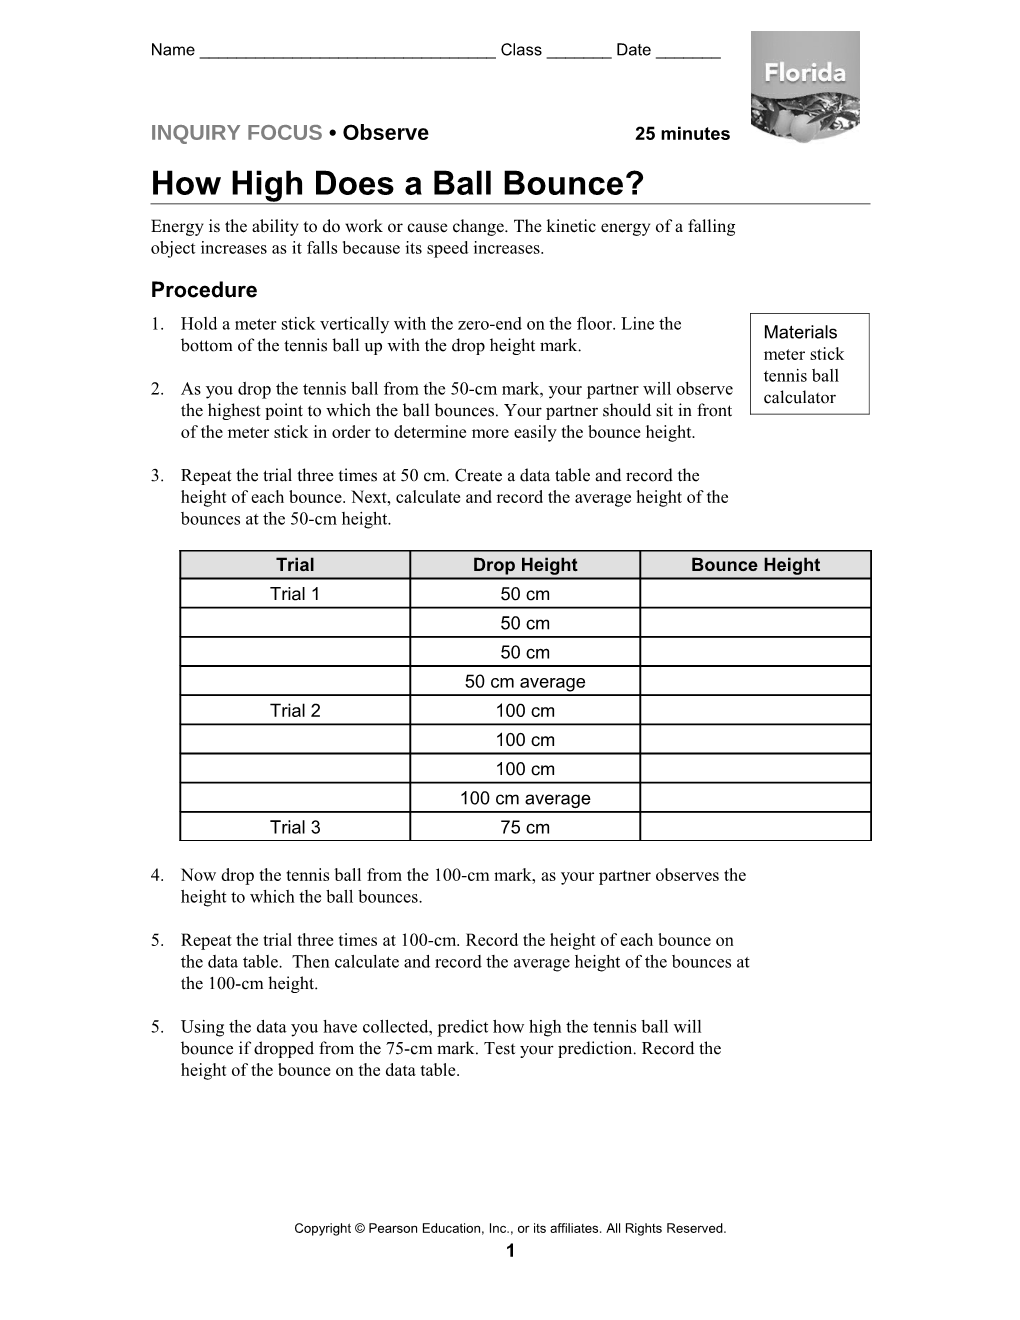 How High Does a Ball Bounce?